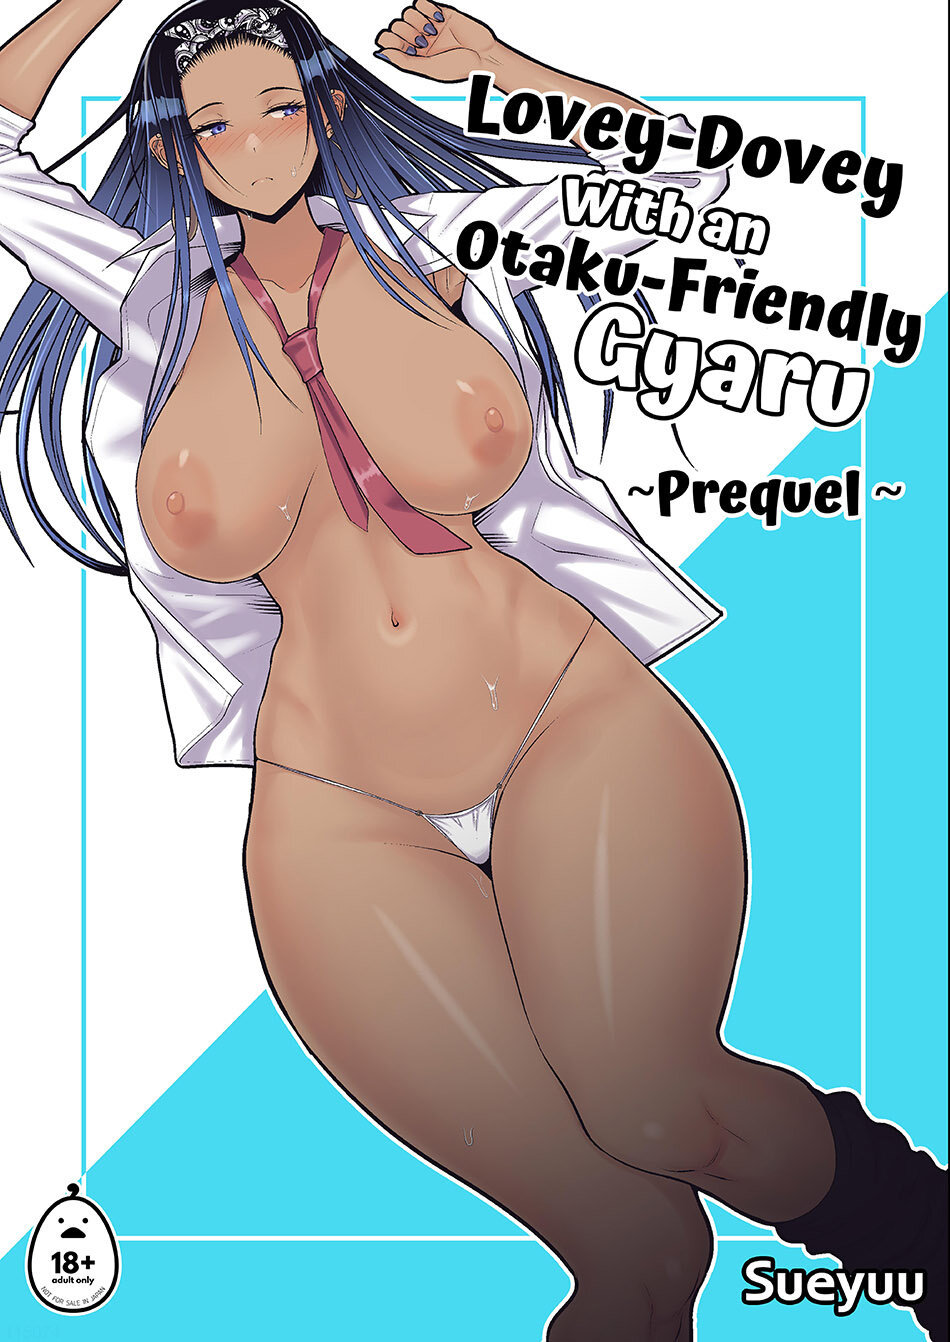 lovey dovey with a otaku friendly gyaru precuela - 2